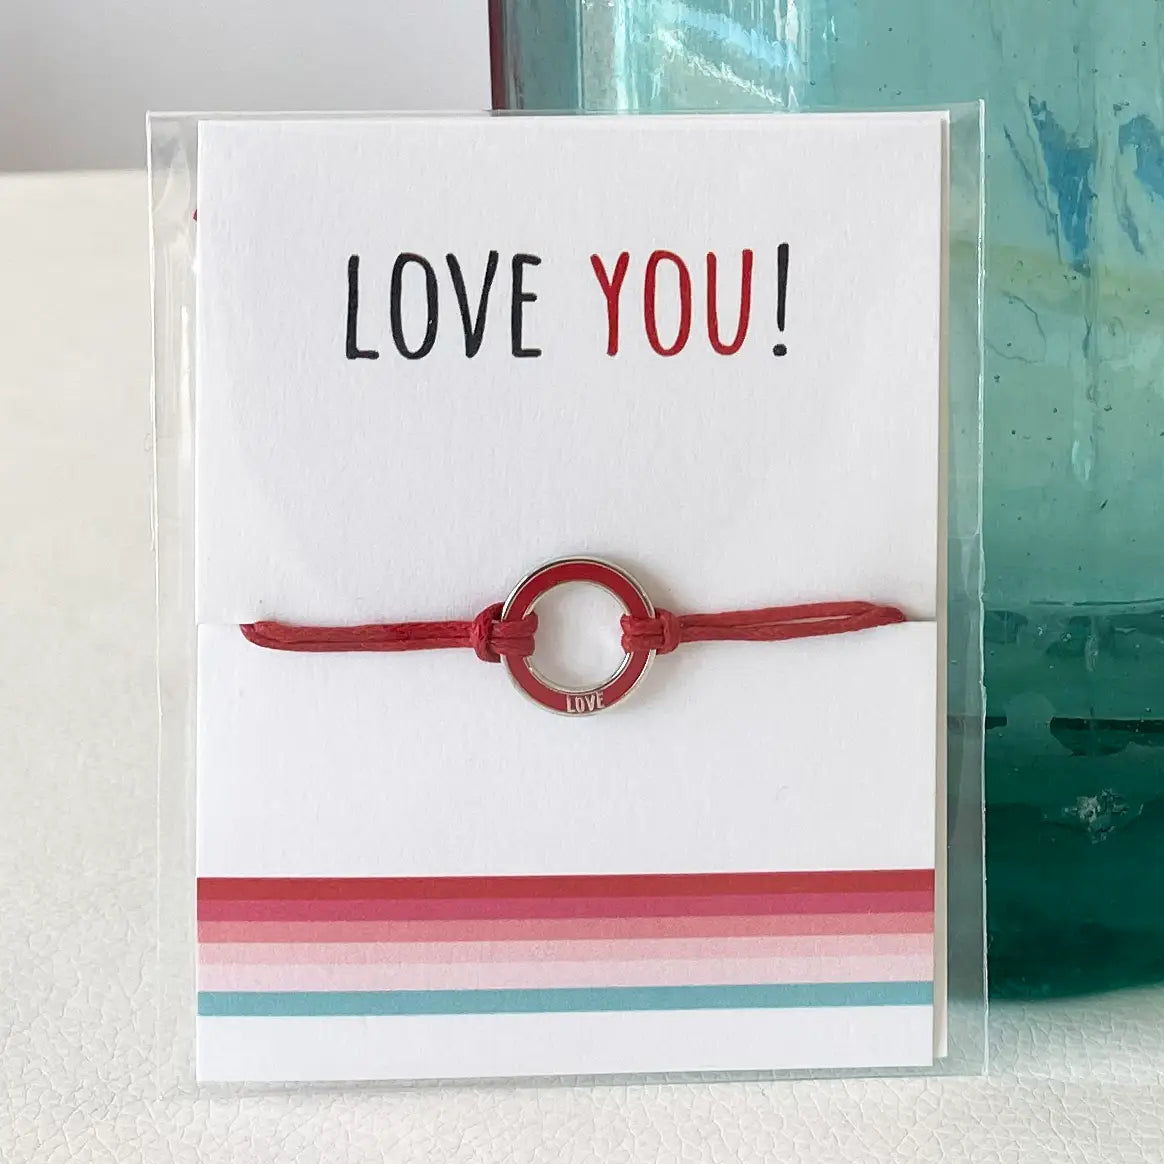 'Love You!' Sentiment String Charm Bracelet.